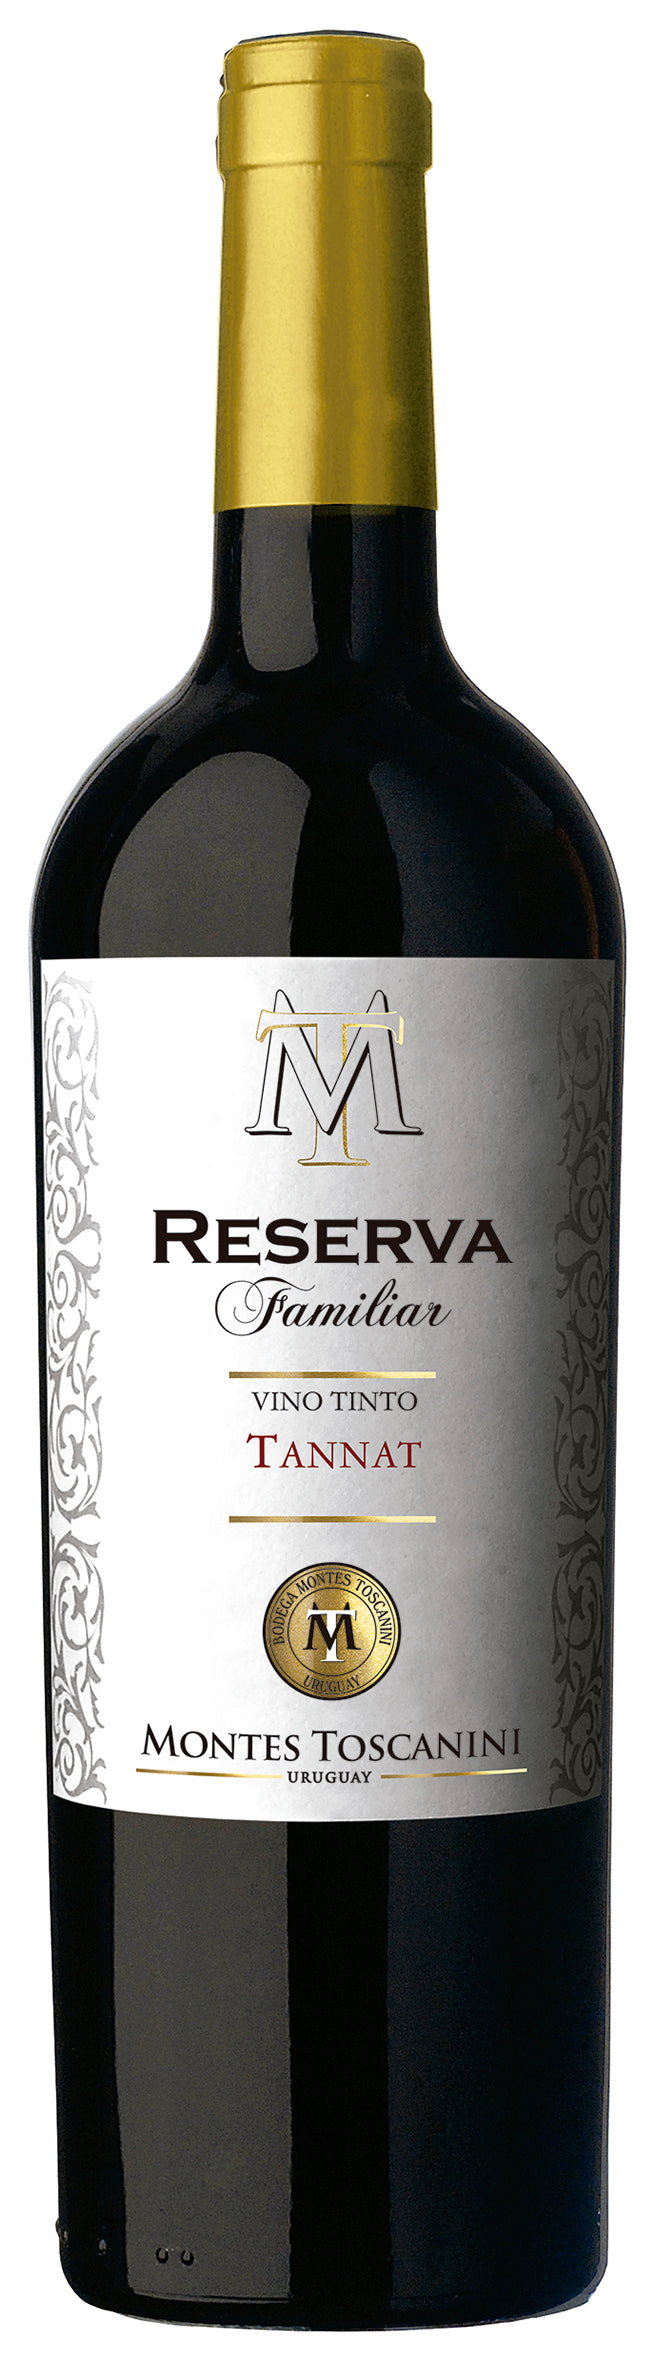 Vino Tinto Montes Toscanini Reserva Familiar Tannat 375 ml